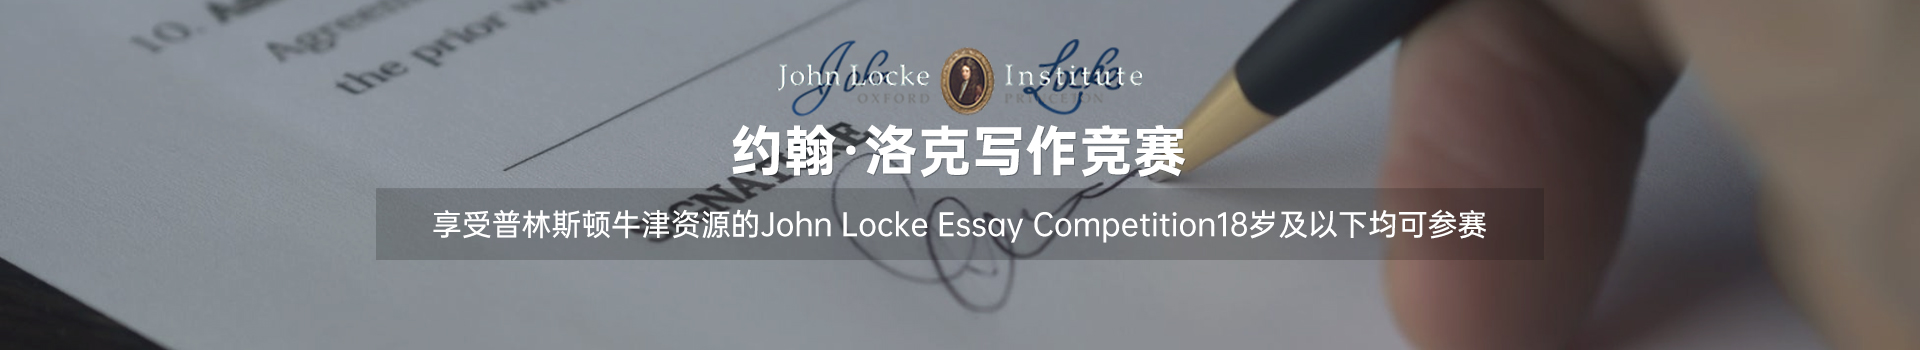 John Locke Essay Competition约翰·洛克论文竞赛